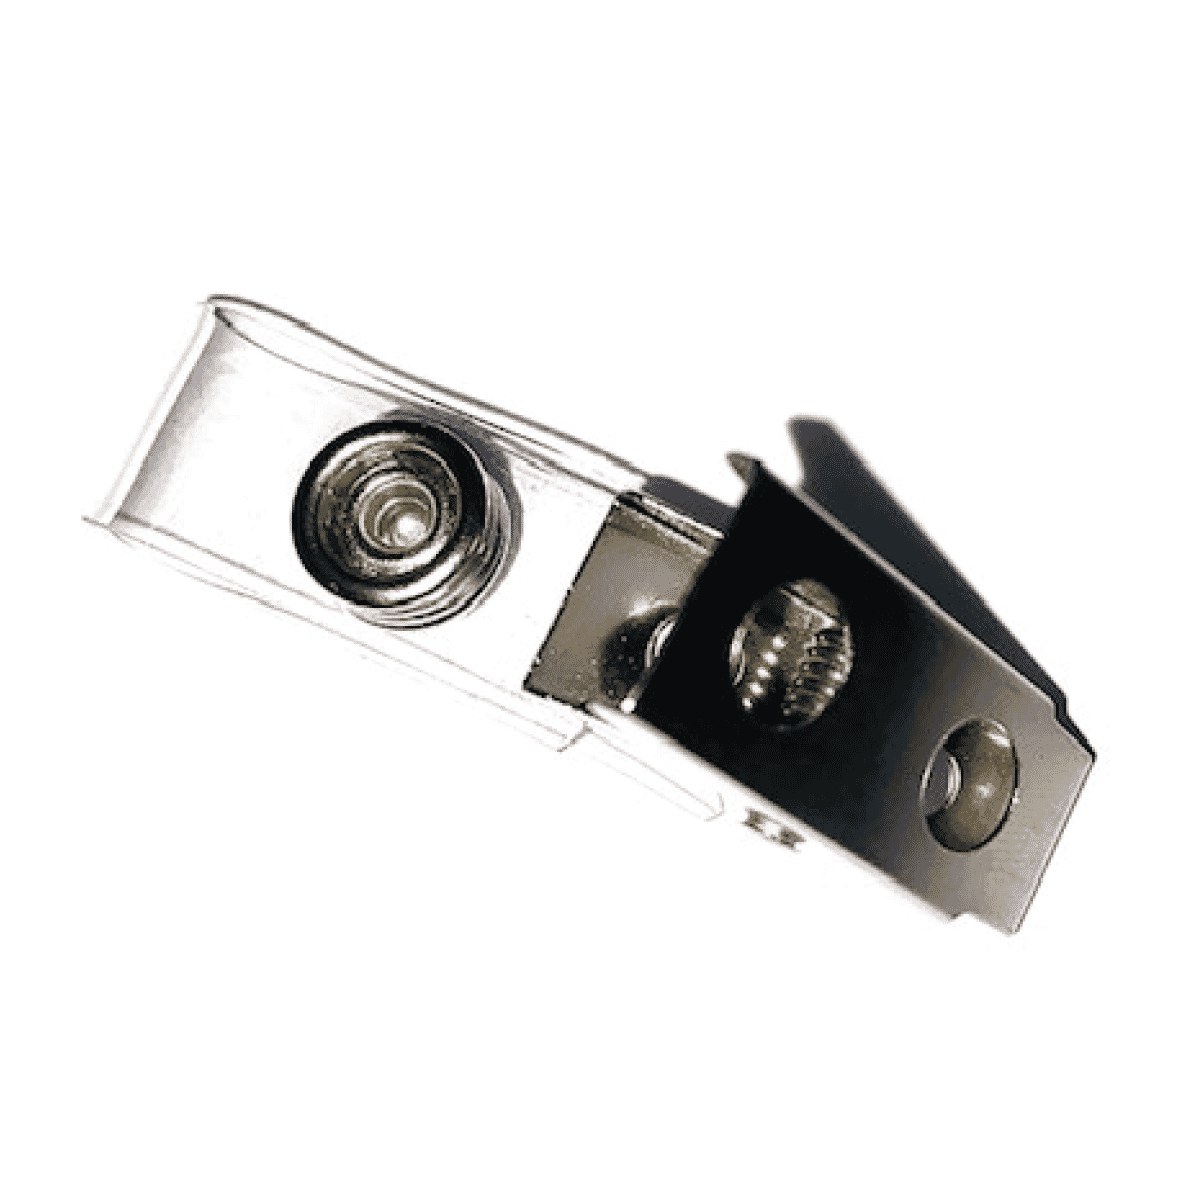 Standard 72mm Strap Clip (25mm gap between press studs)